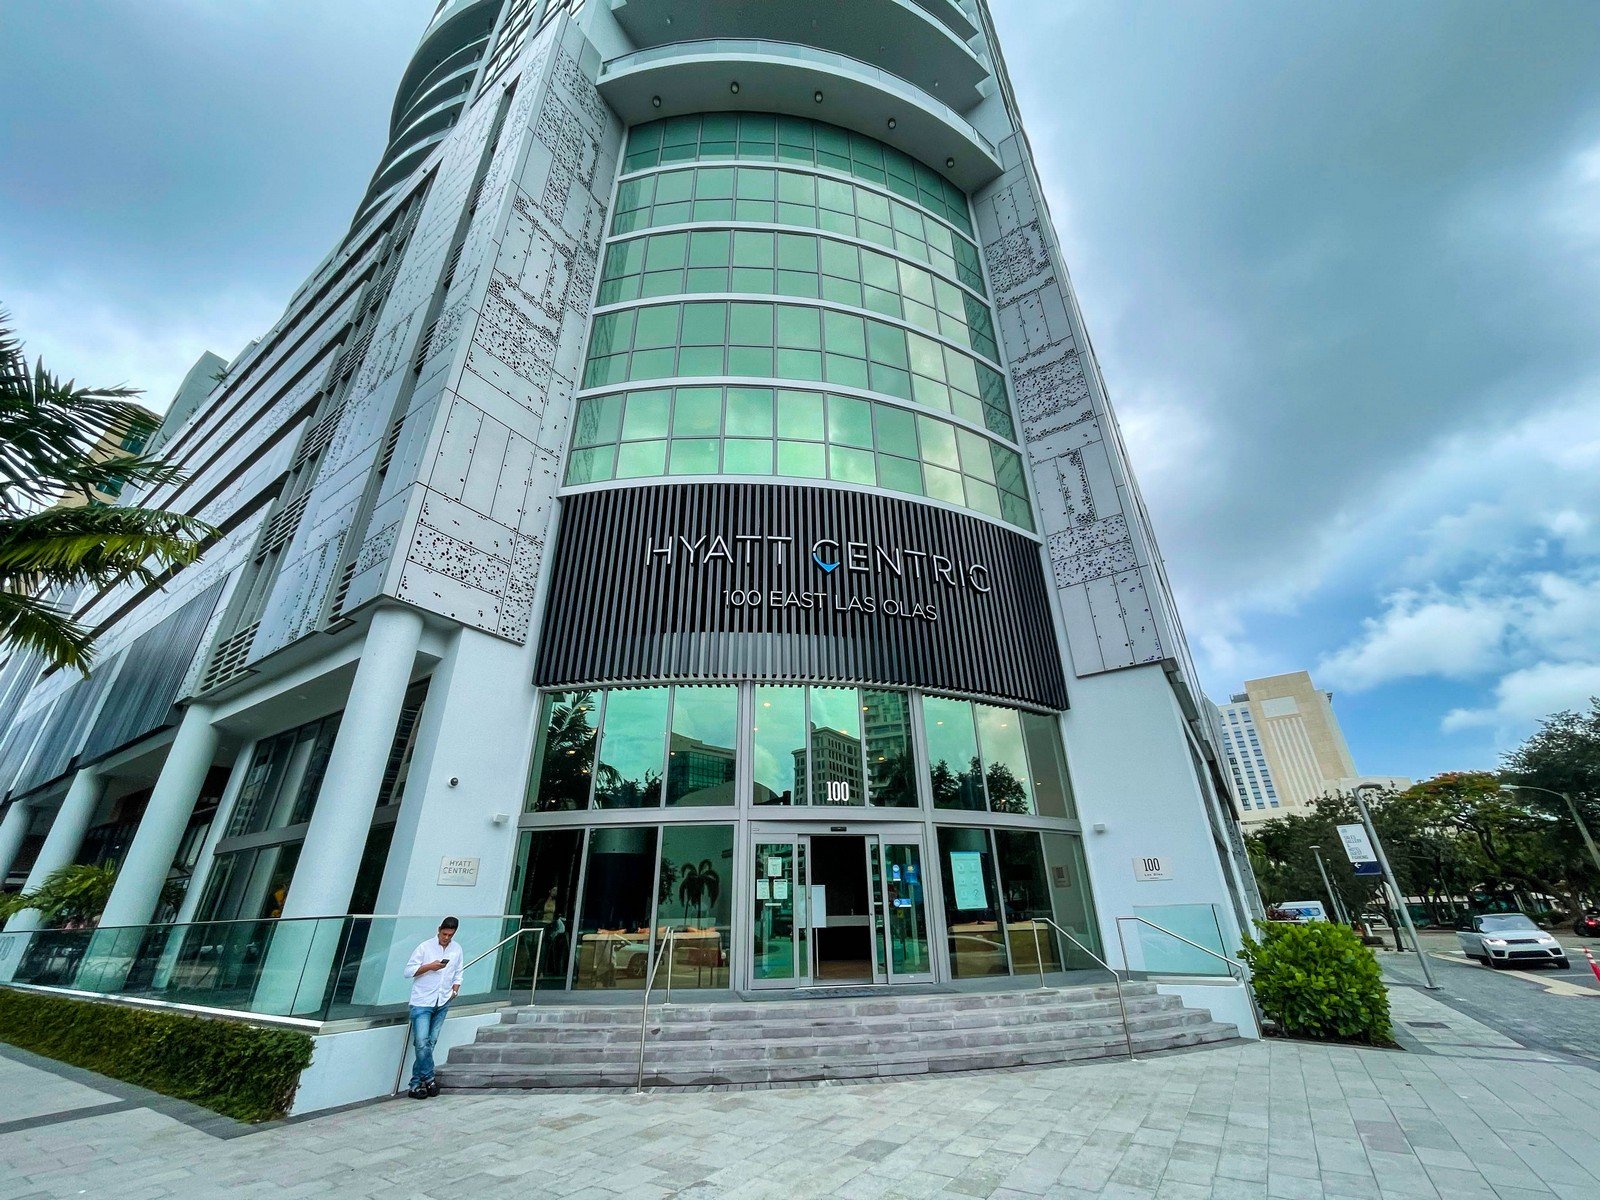 Hyatt Centric Las Olas Fort Lauderdale Hotel Review | Royal Caribbean Blog